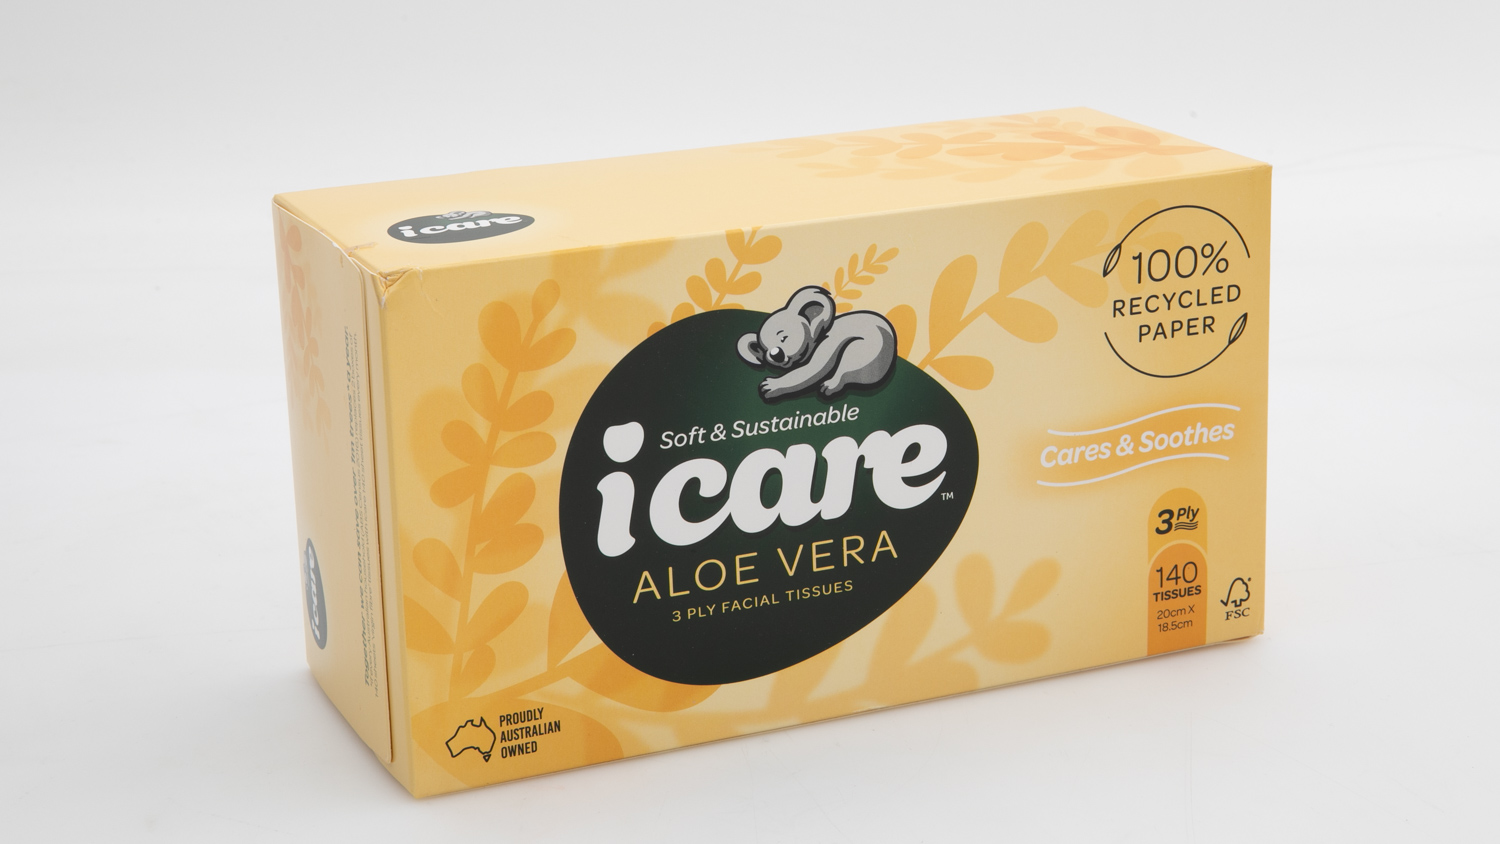 iCare Aloe Vera 3 ply Facial Tissues 140 tissues carousel image